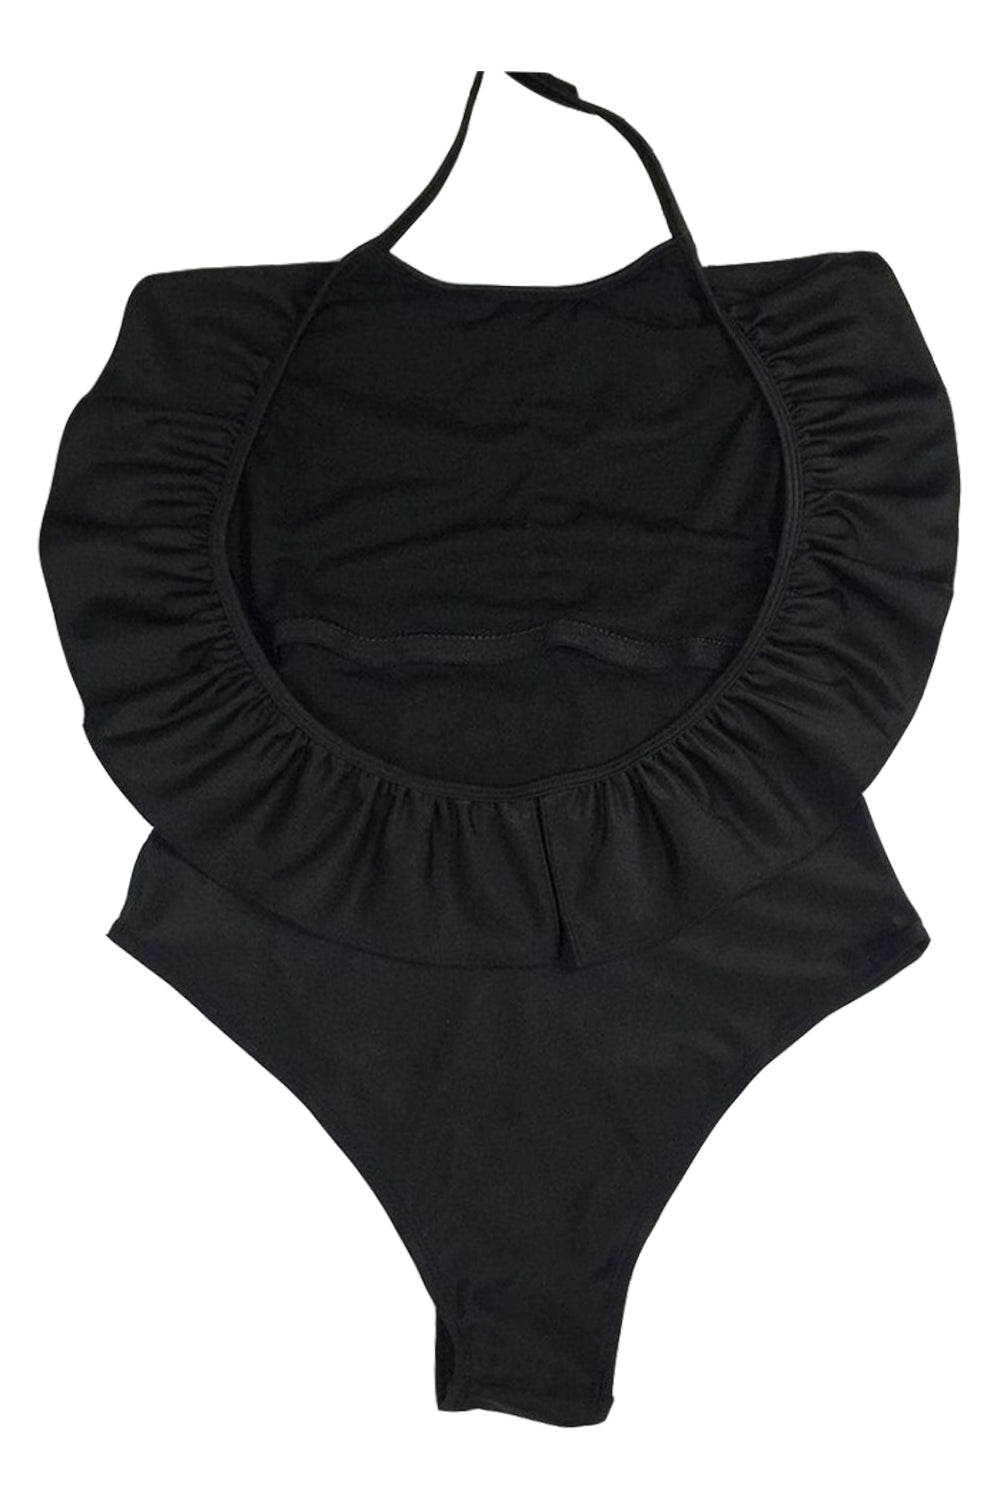 Iyasson Black Falbala Halter One-piece Swimsuit